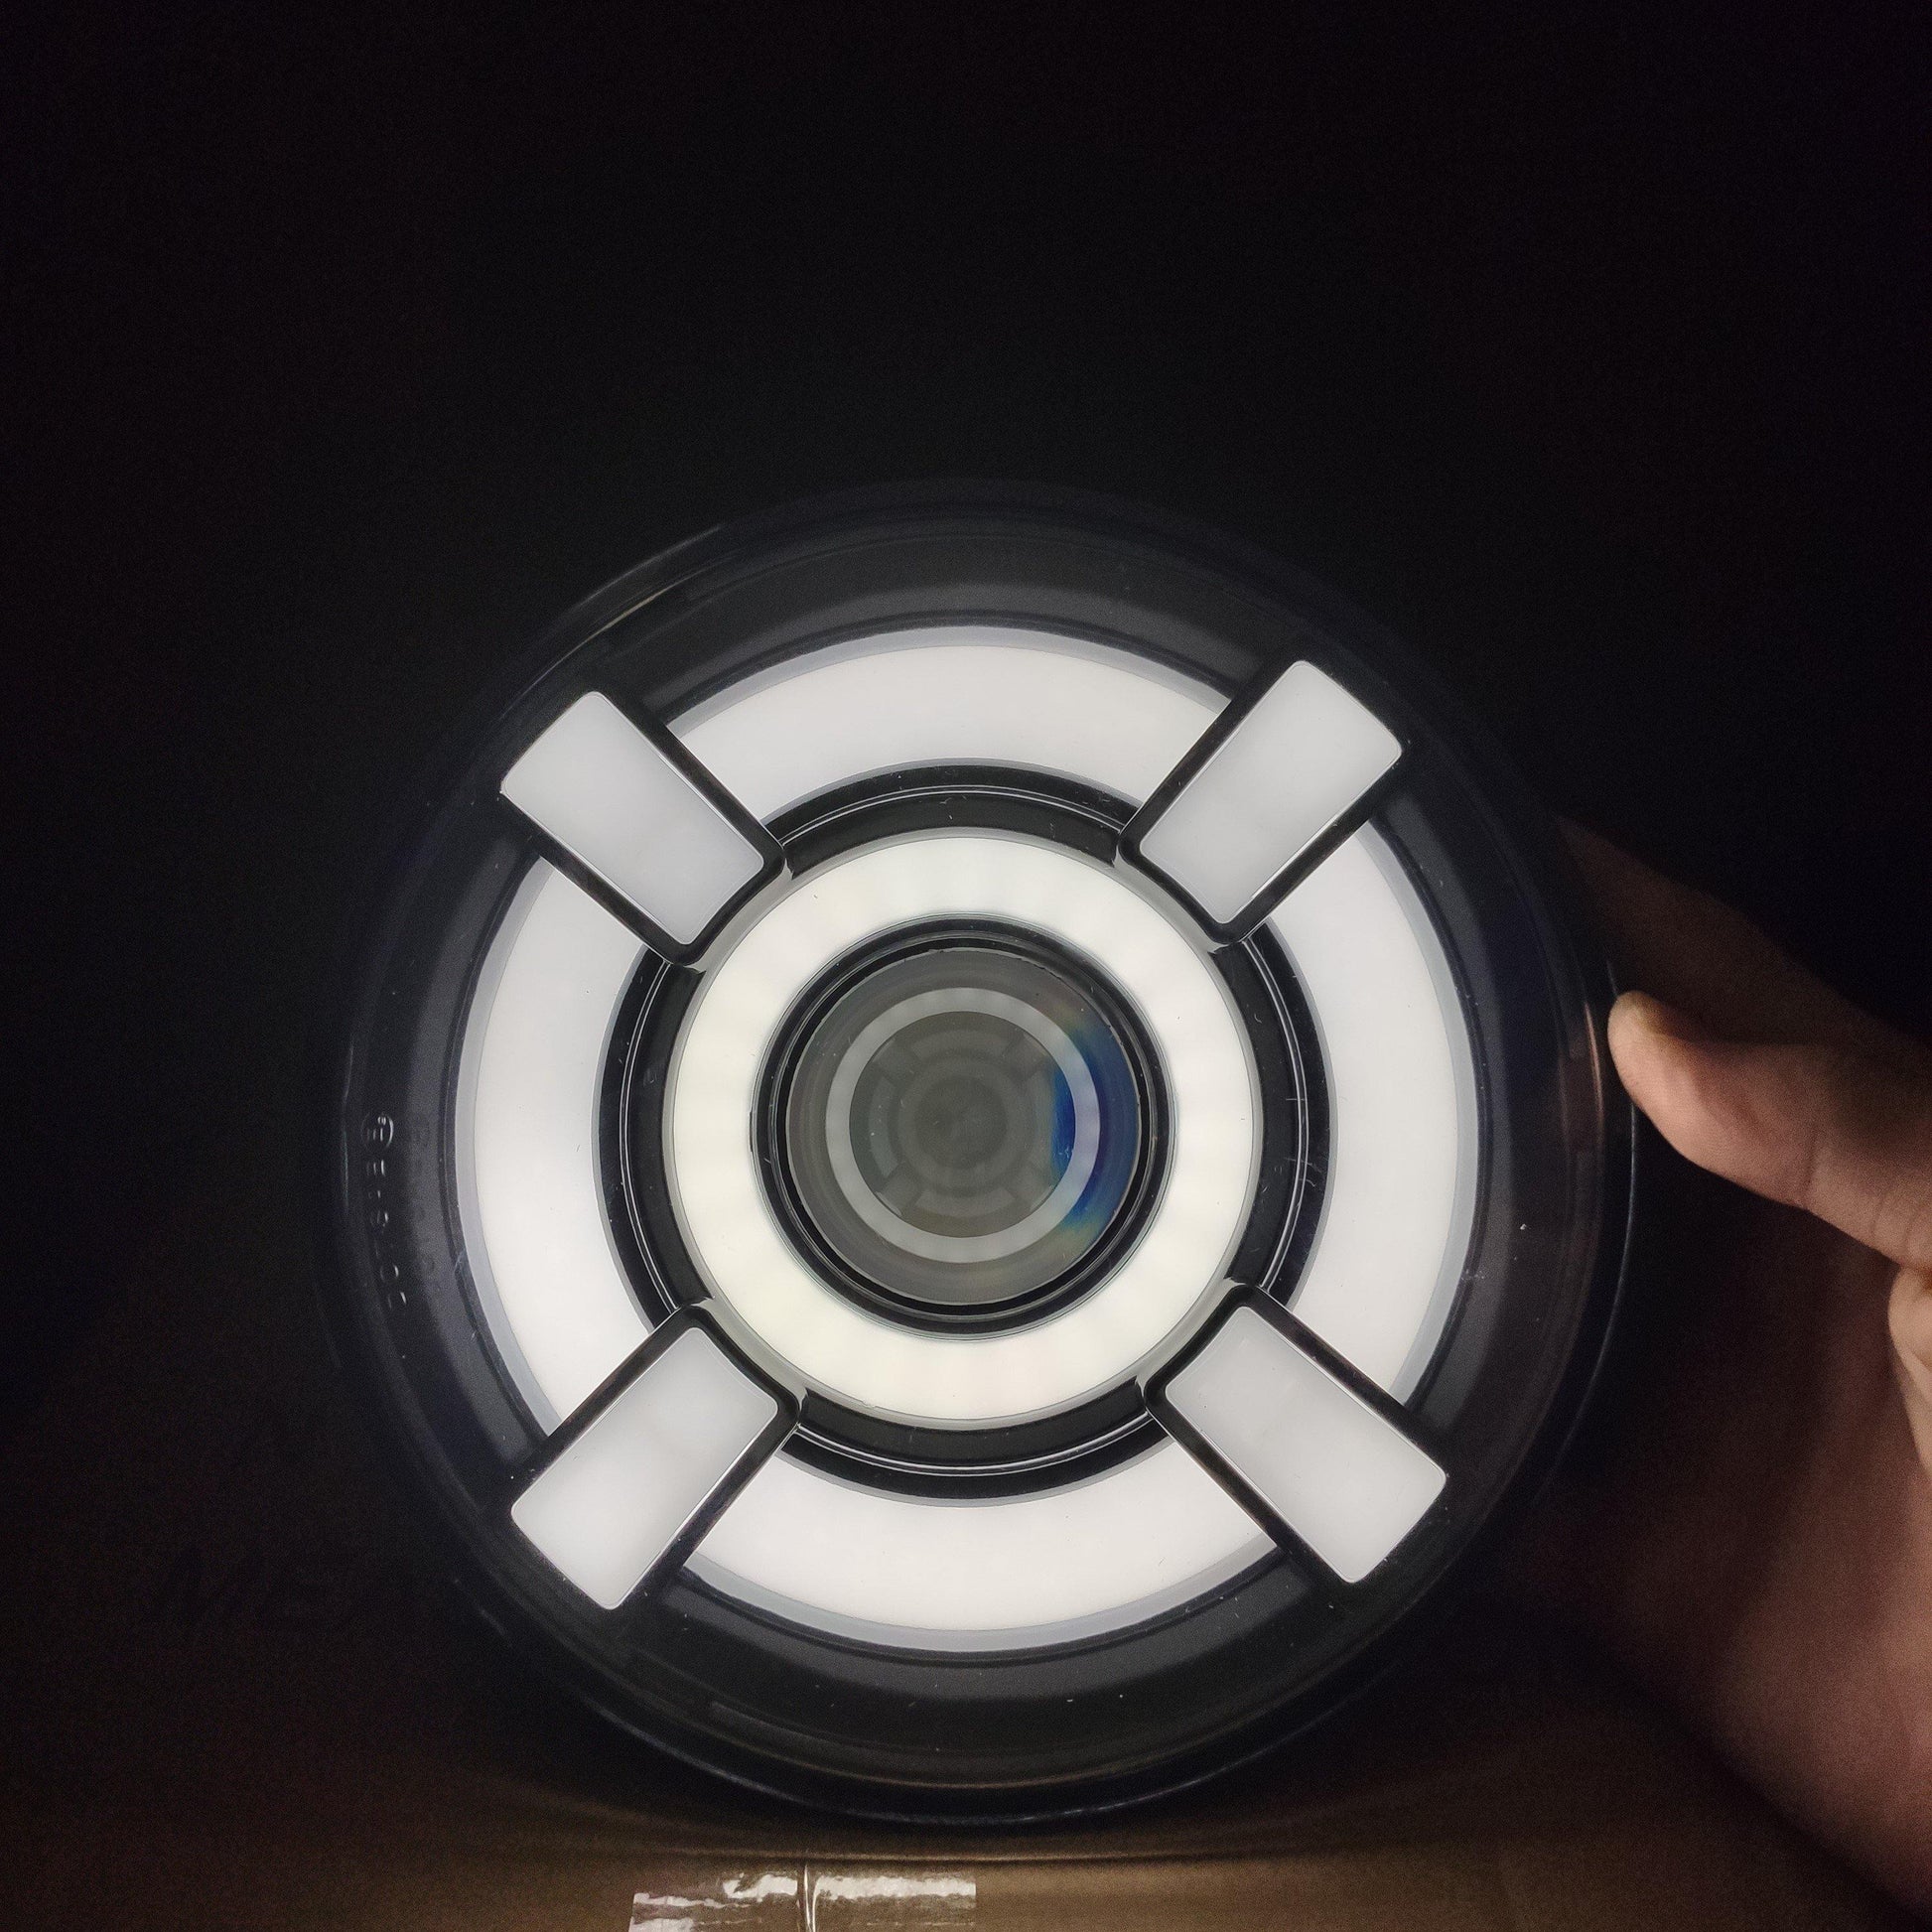 New X Design Headlight (6 months warranty) - Premium Headlights from Sparewick - Just Rs. 2500! Shop now at Sparewick